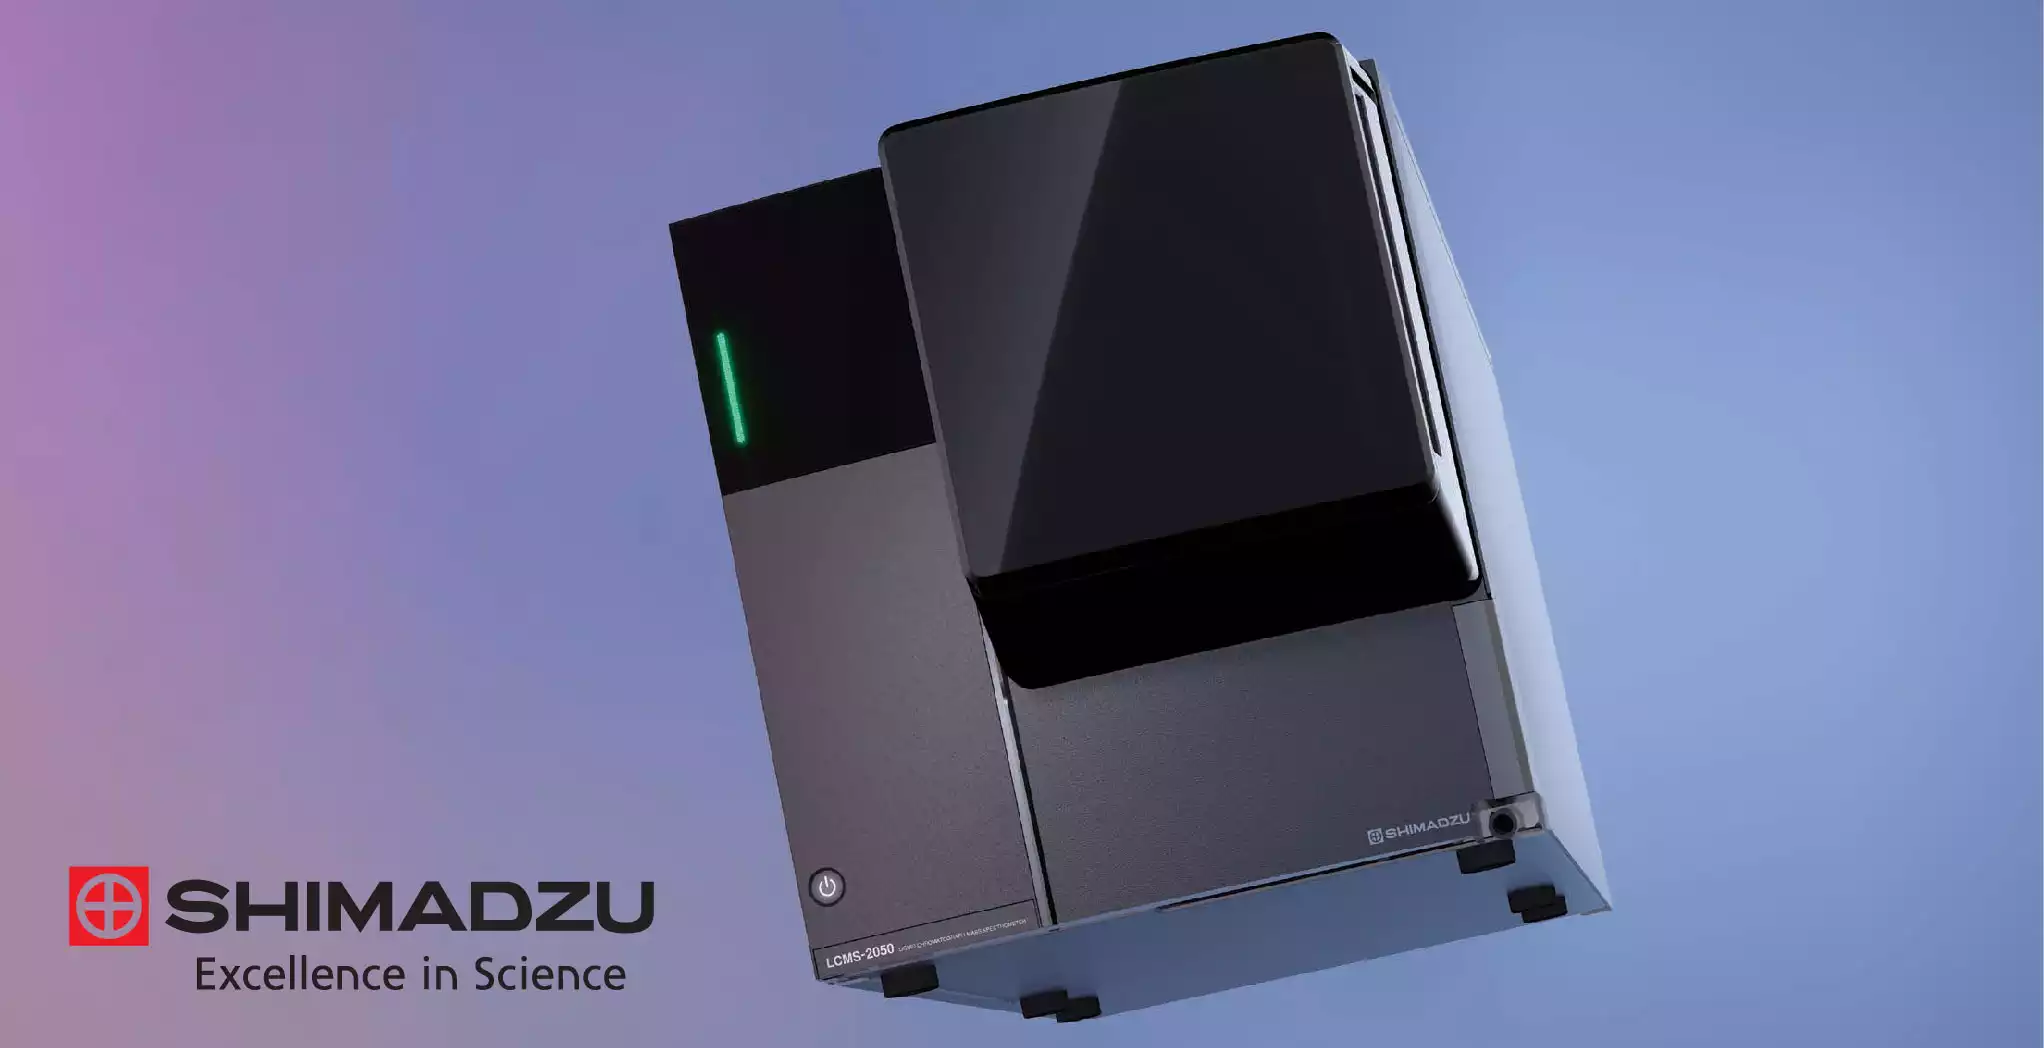 Shimadzu LCMS-2050 Single Quadrupole Mass Spectrometer